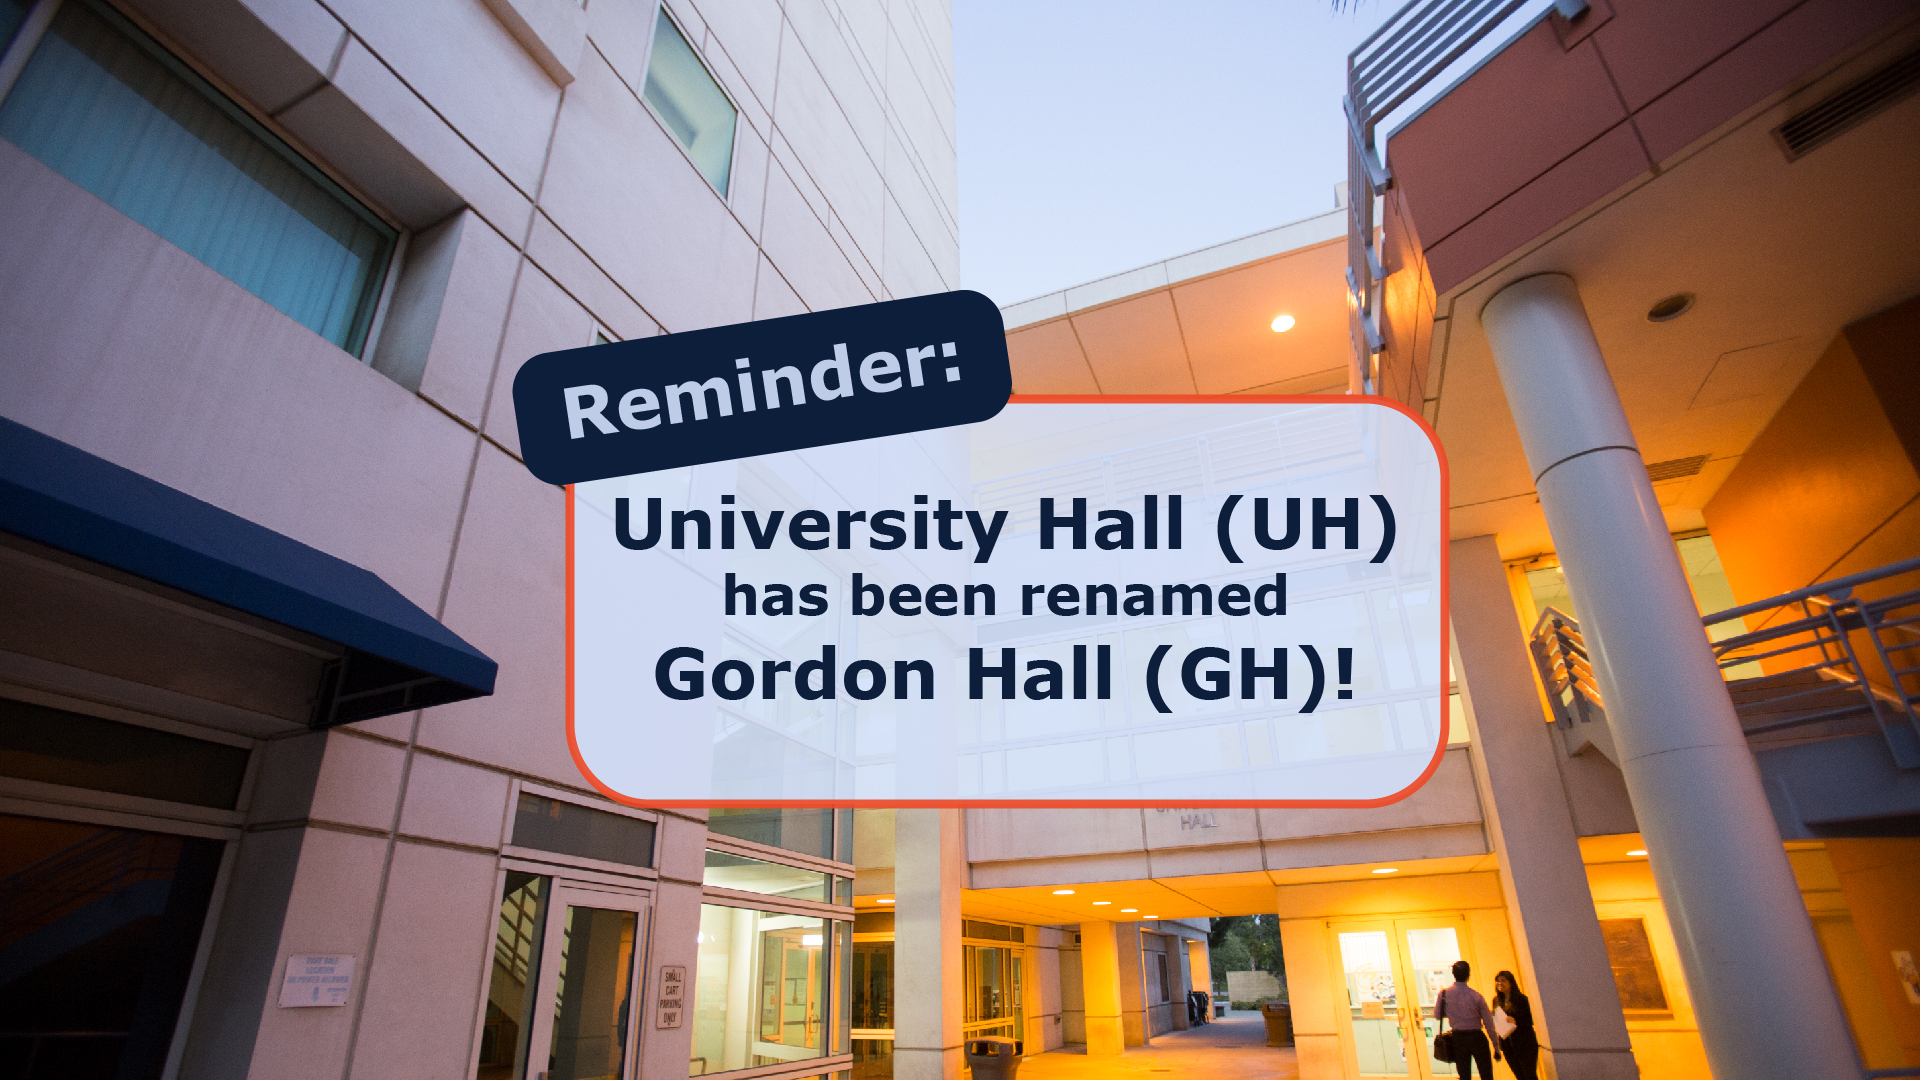 Reminder that University Hall had been renamed Gordon Hall